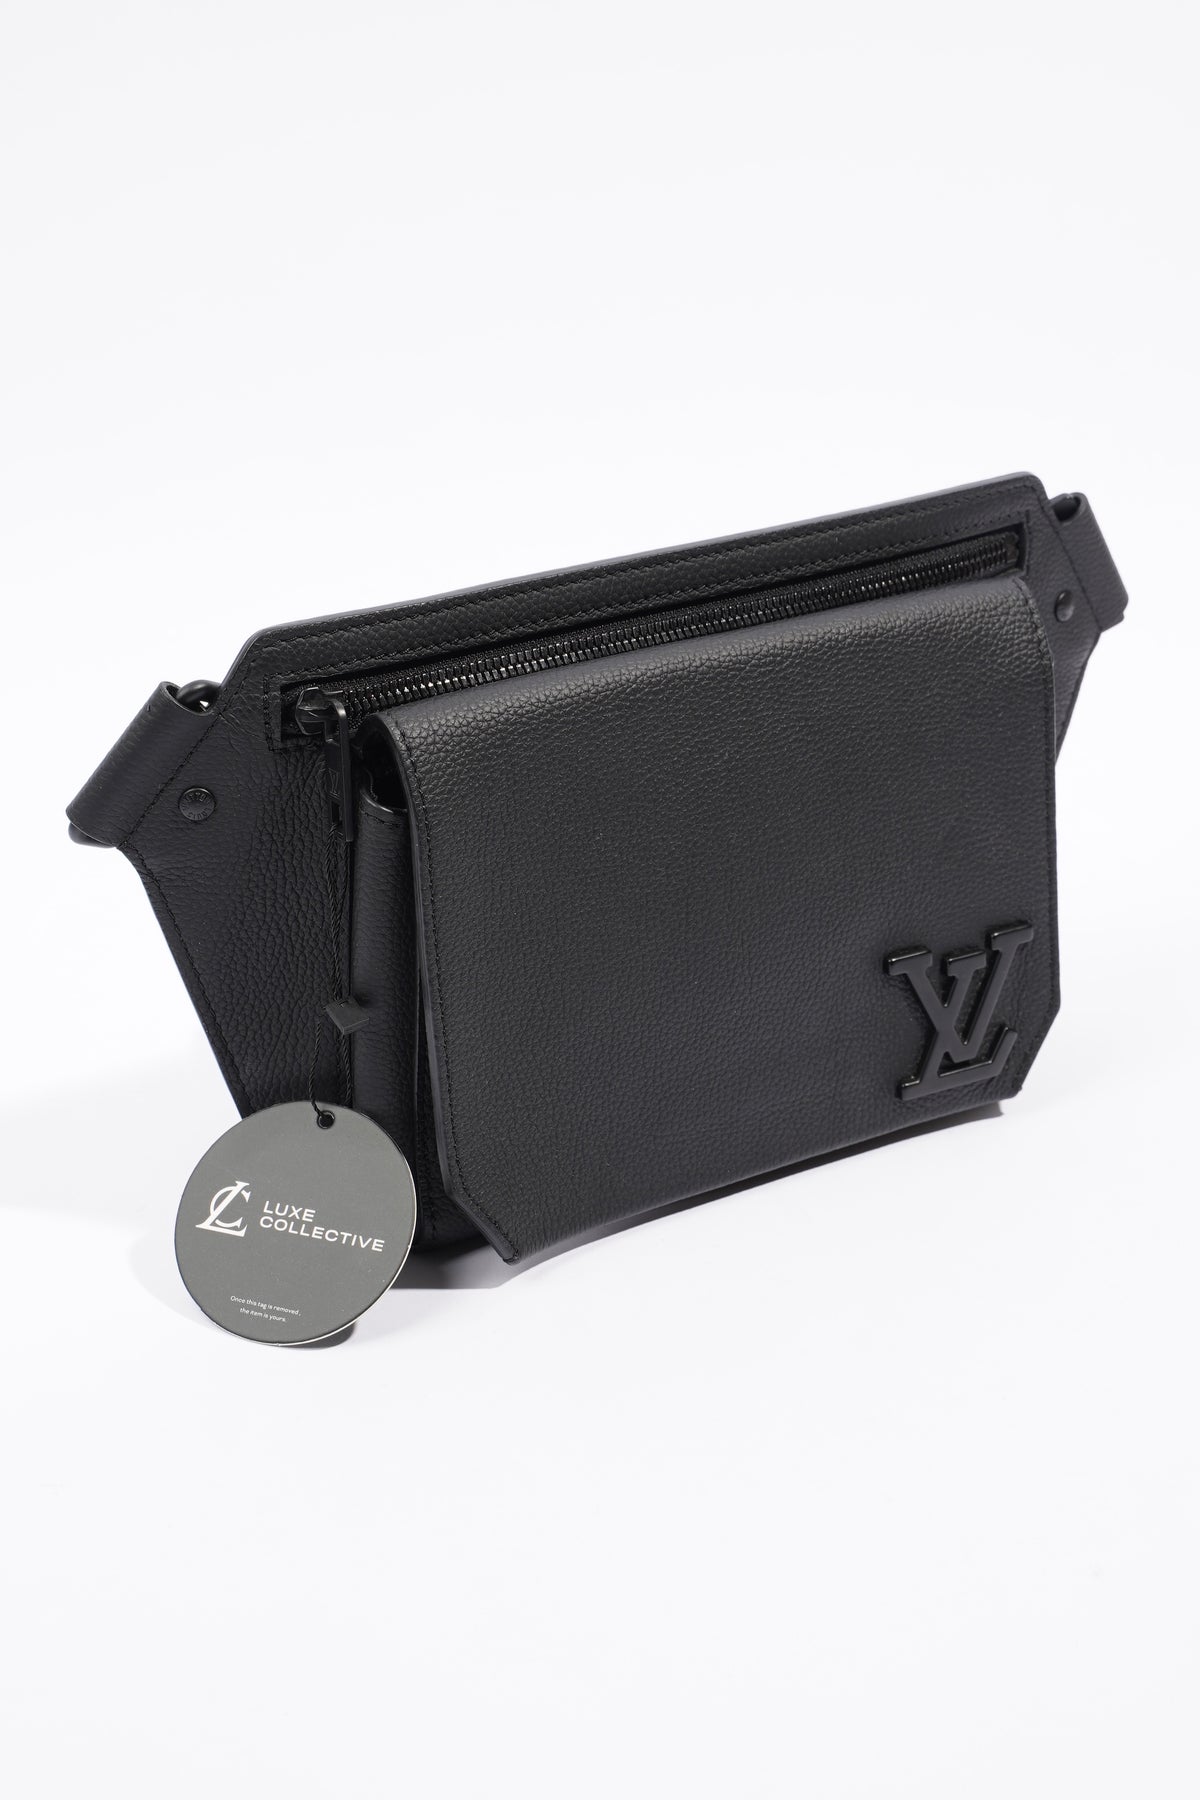 Louis Vuitton LV Aerogram Slingbag, Black, One Size